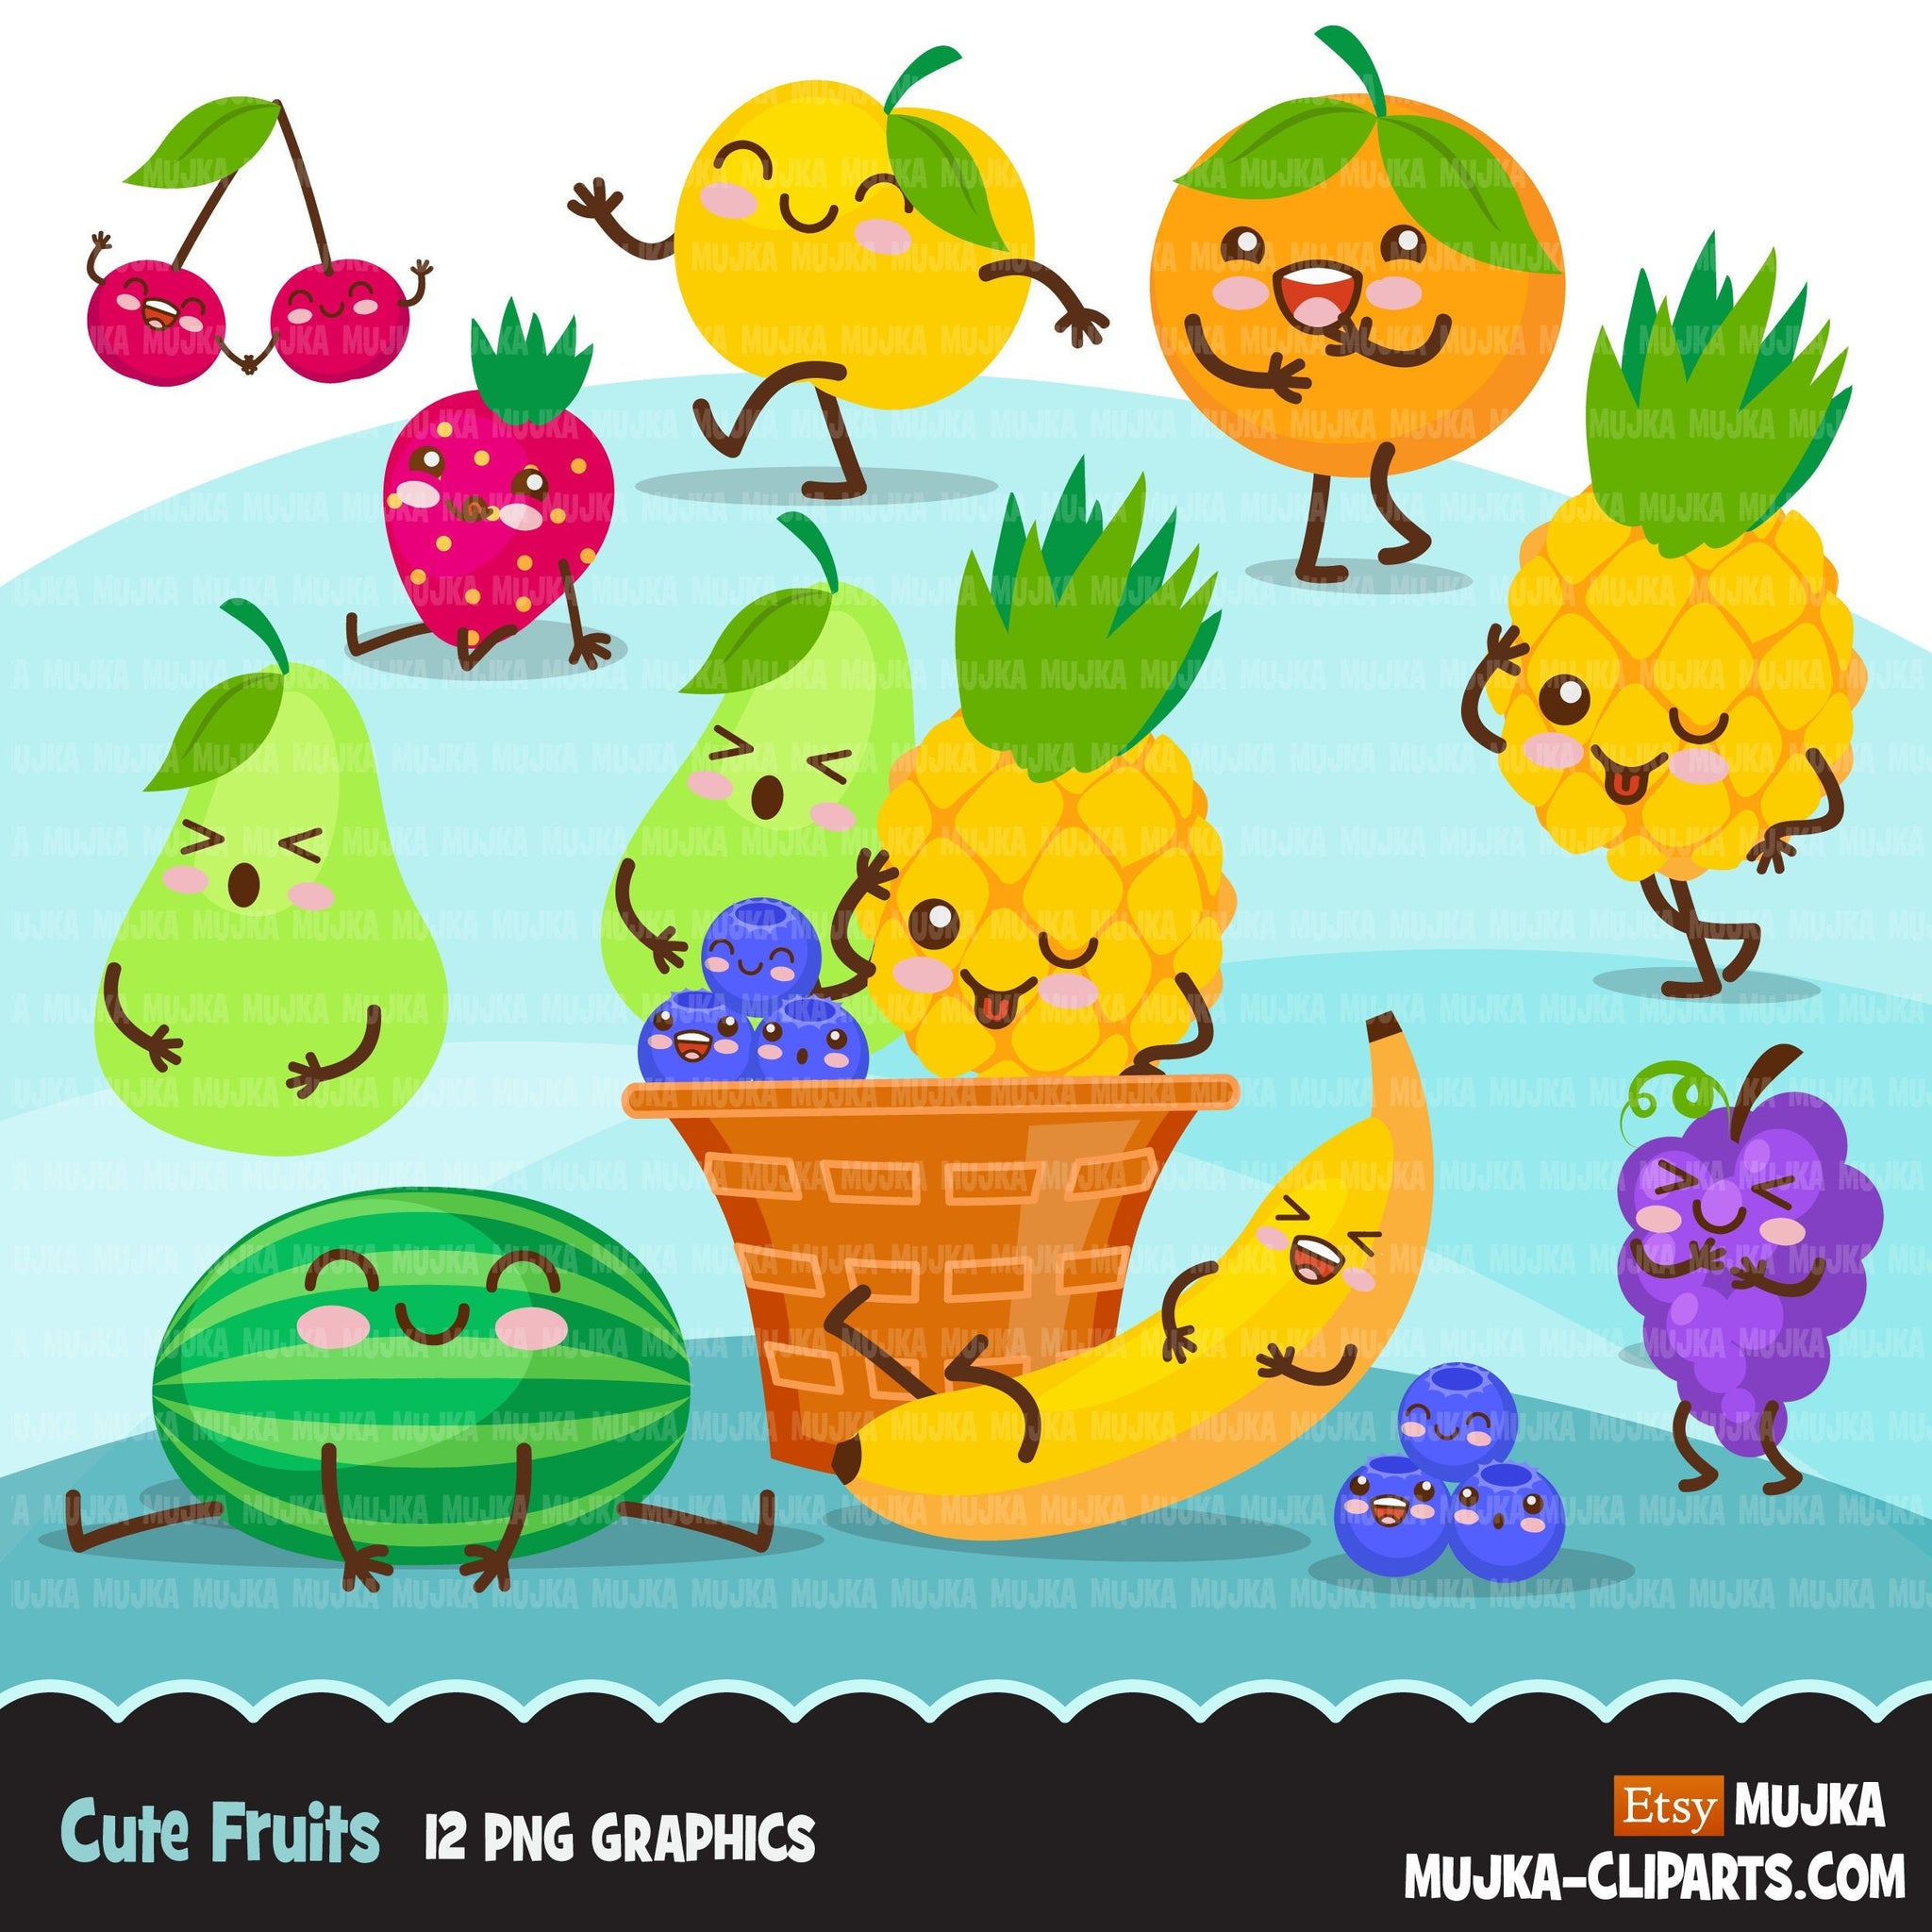 Fruit clipart, cute kawaii fruit graphics, pineapple, apple, banana, melon, cherry, strawberry, grape, orange, pear PNG t-shirt clip art